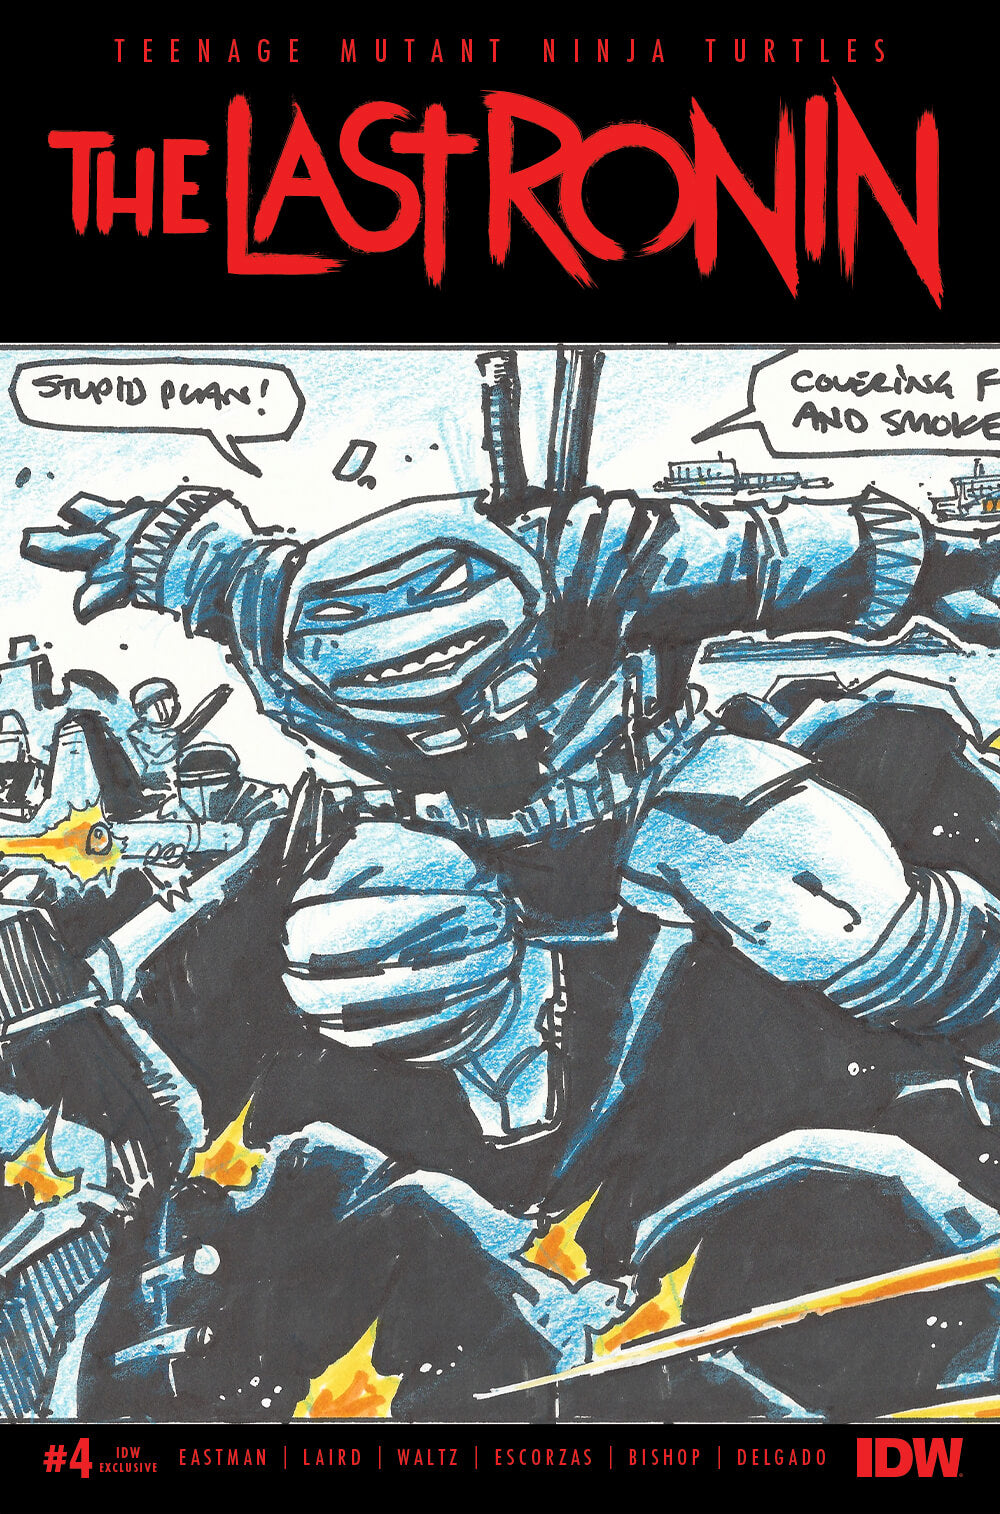 Teenage Mutant Ninja Turtles: The Last Ronin #4. (Reissue) IDW Exclusive